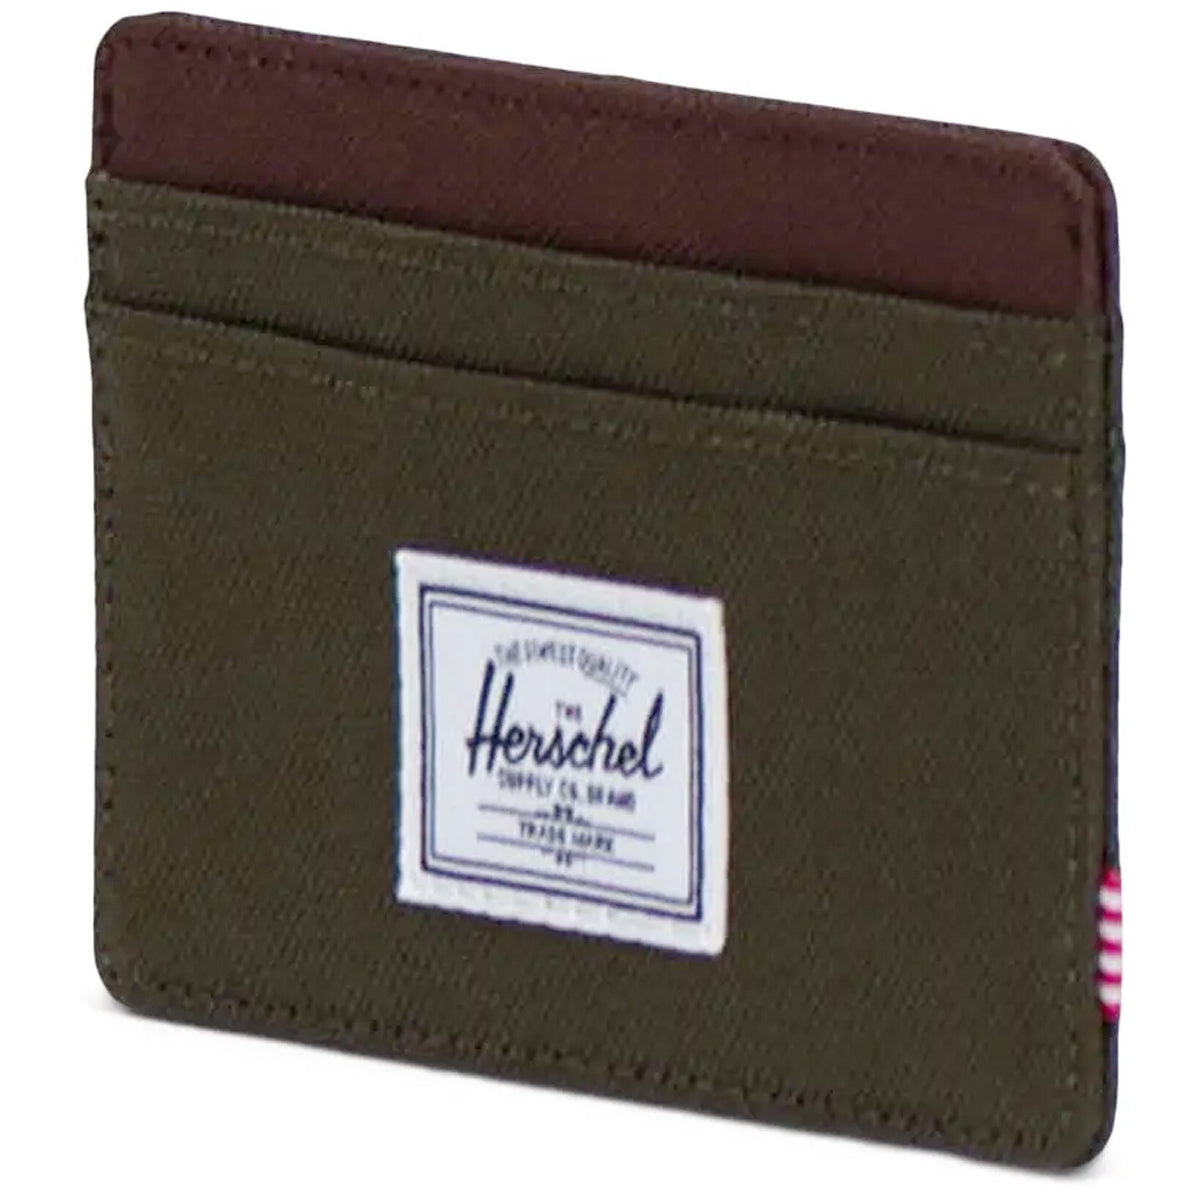 Herschel Supply Charlie Cardholder Wallet - Ivy Green image 2